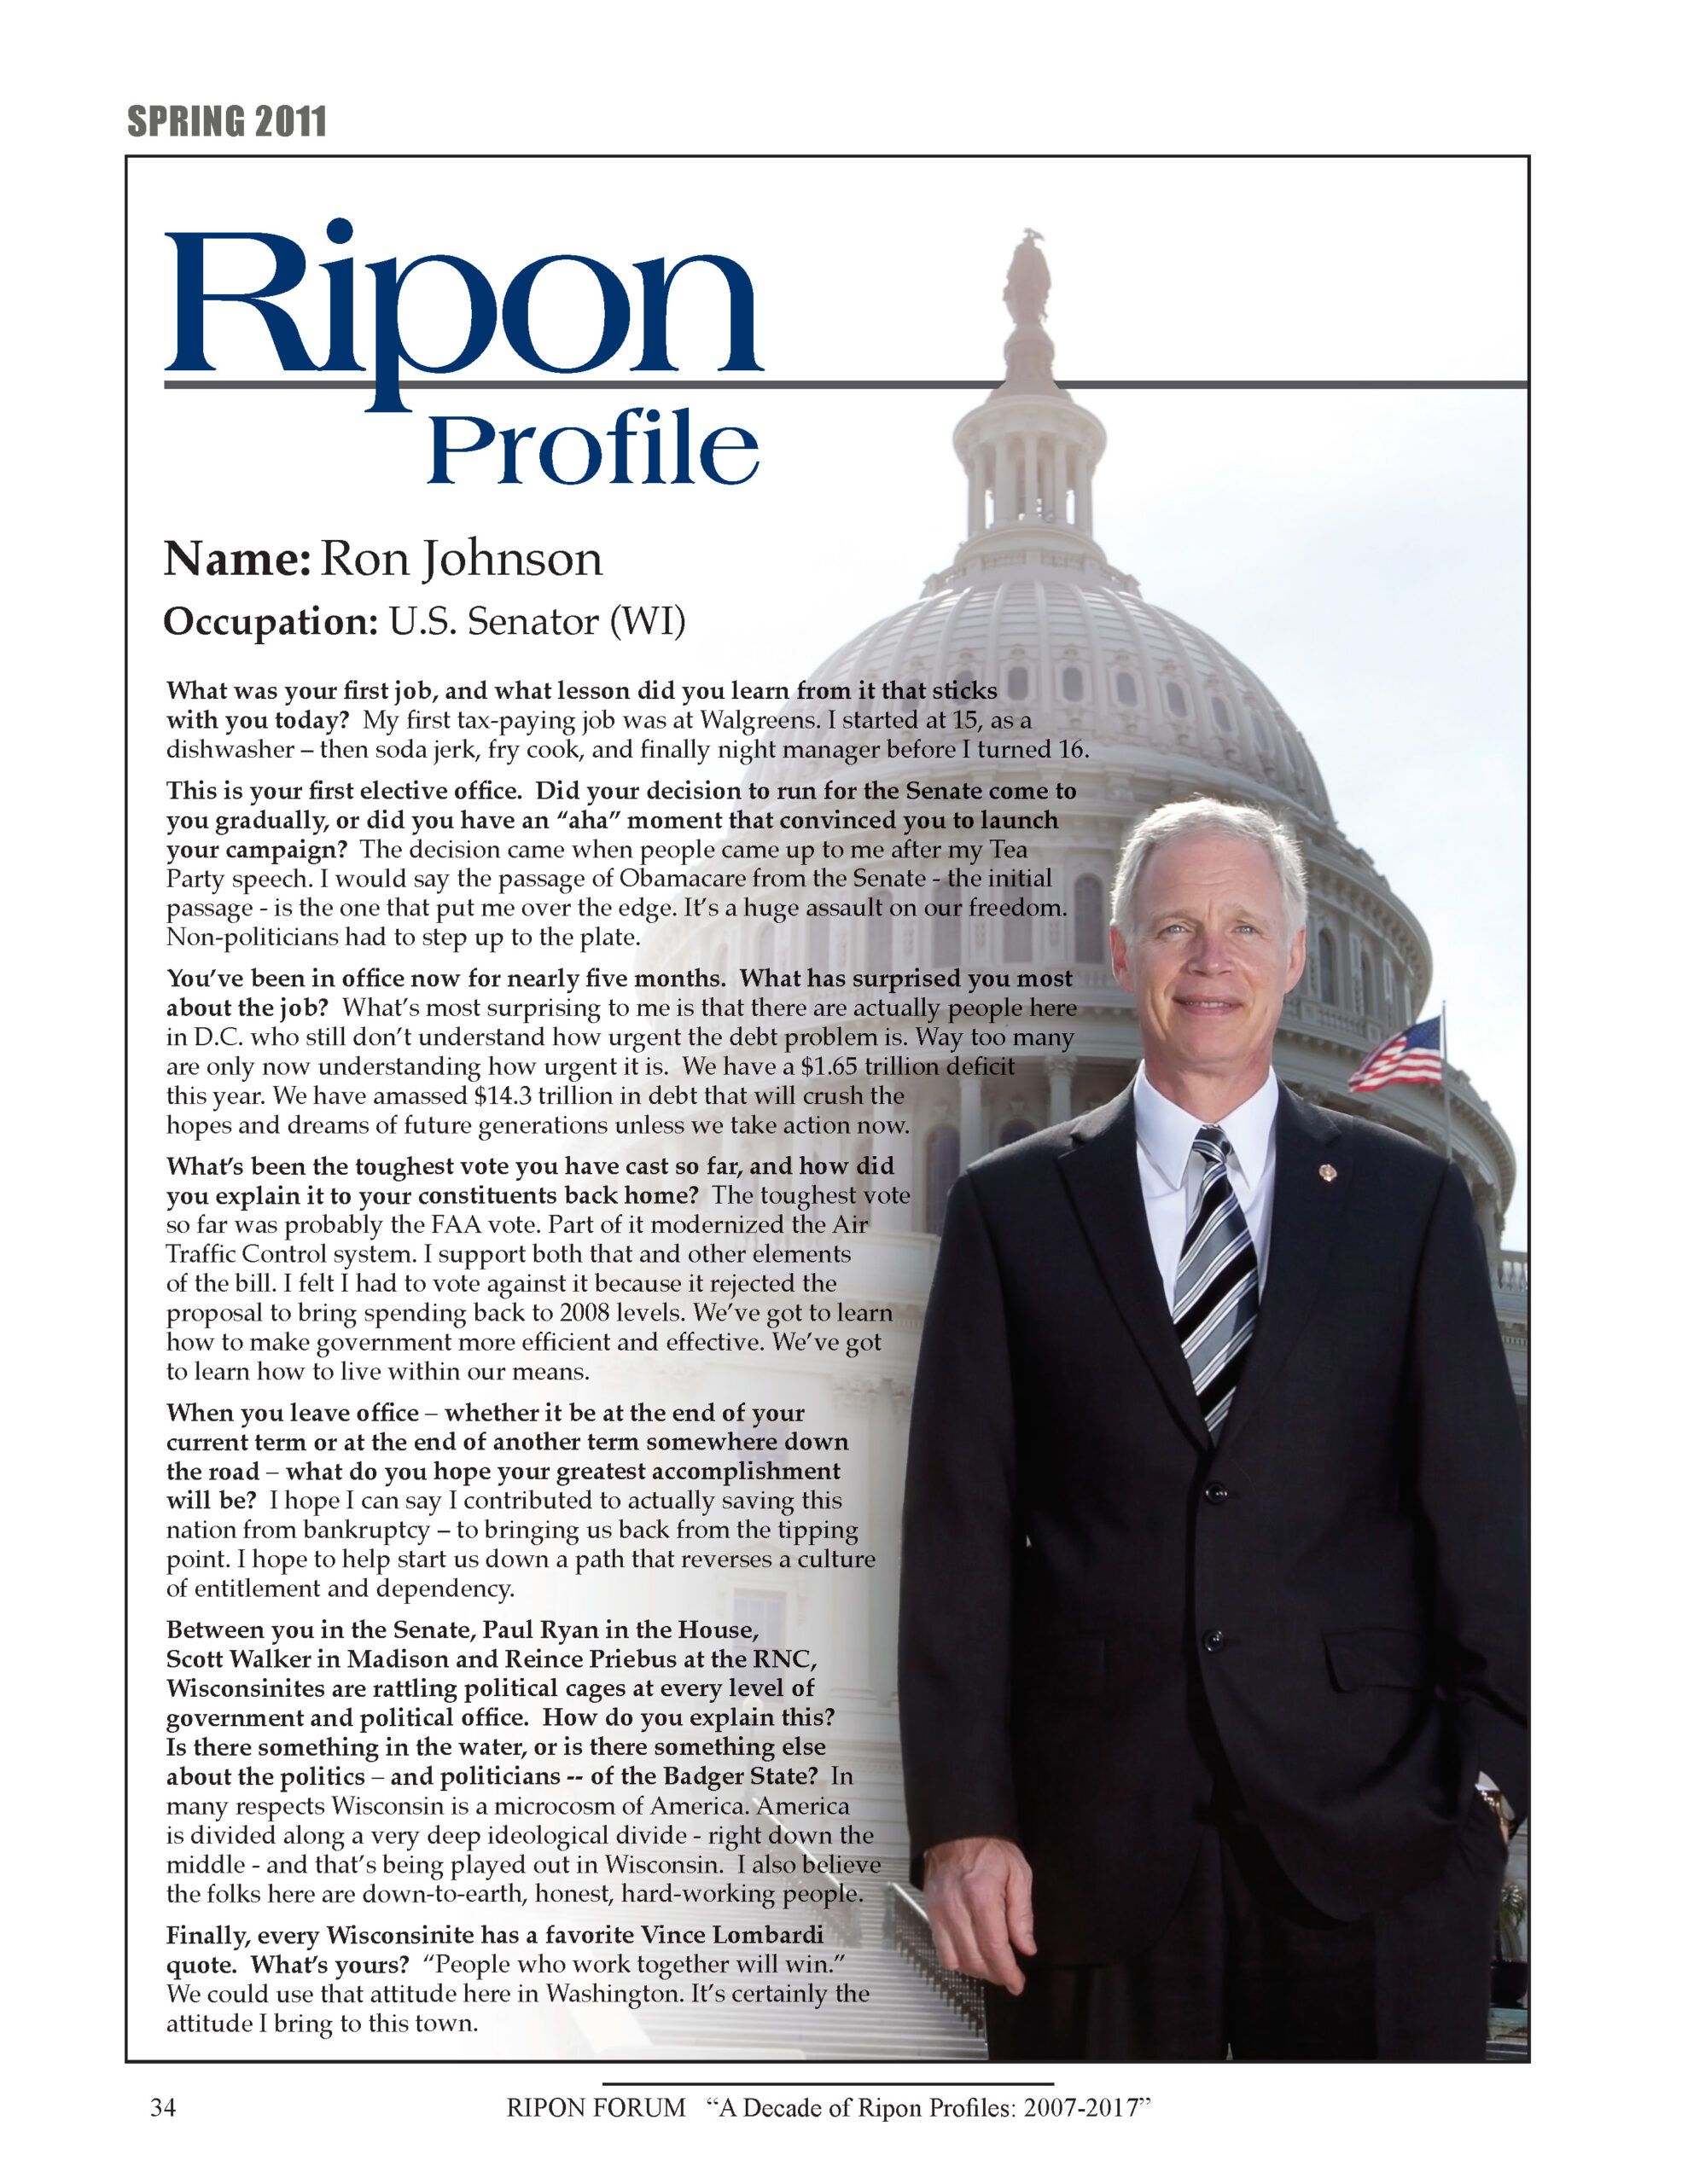 Ripon Profile of Ron Johnson